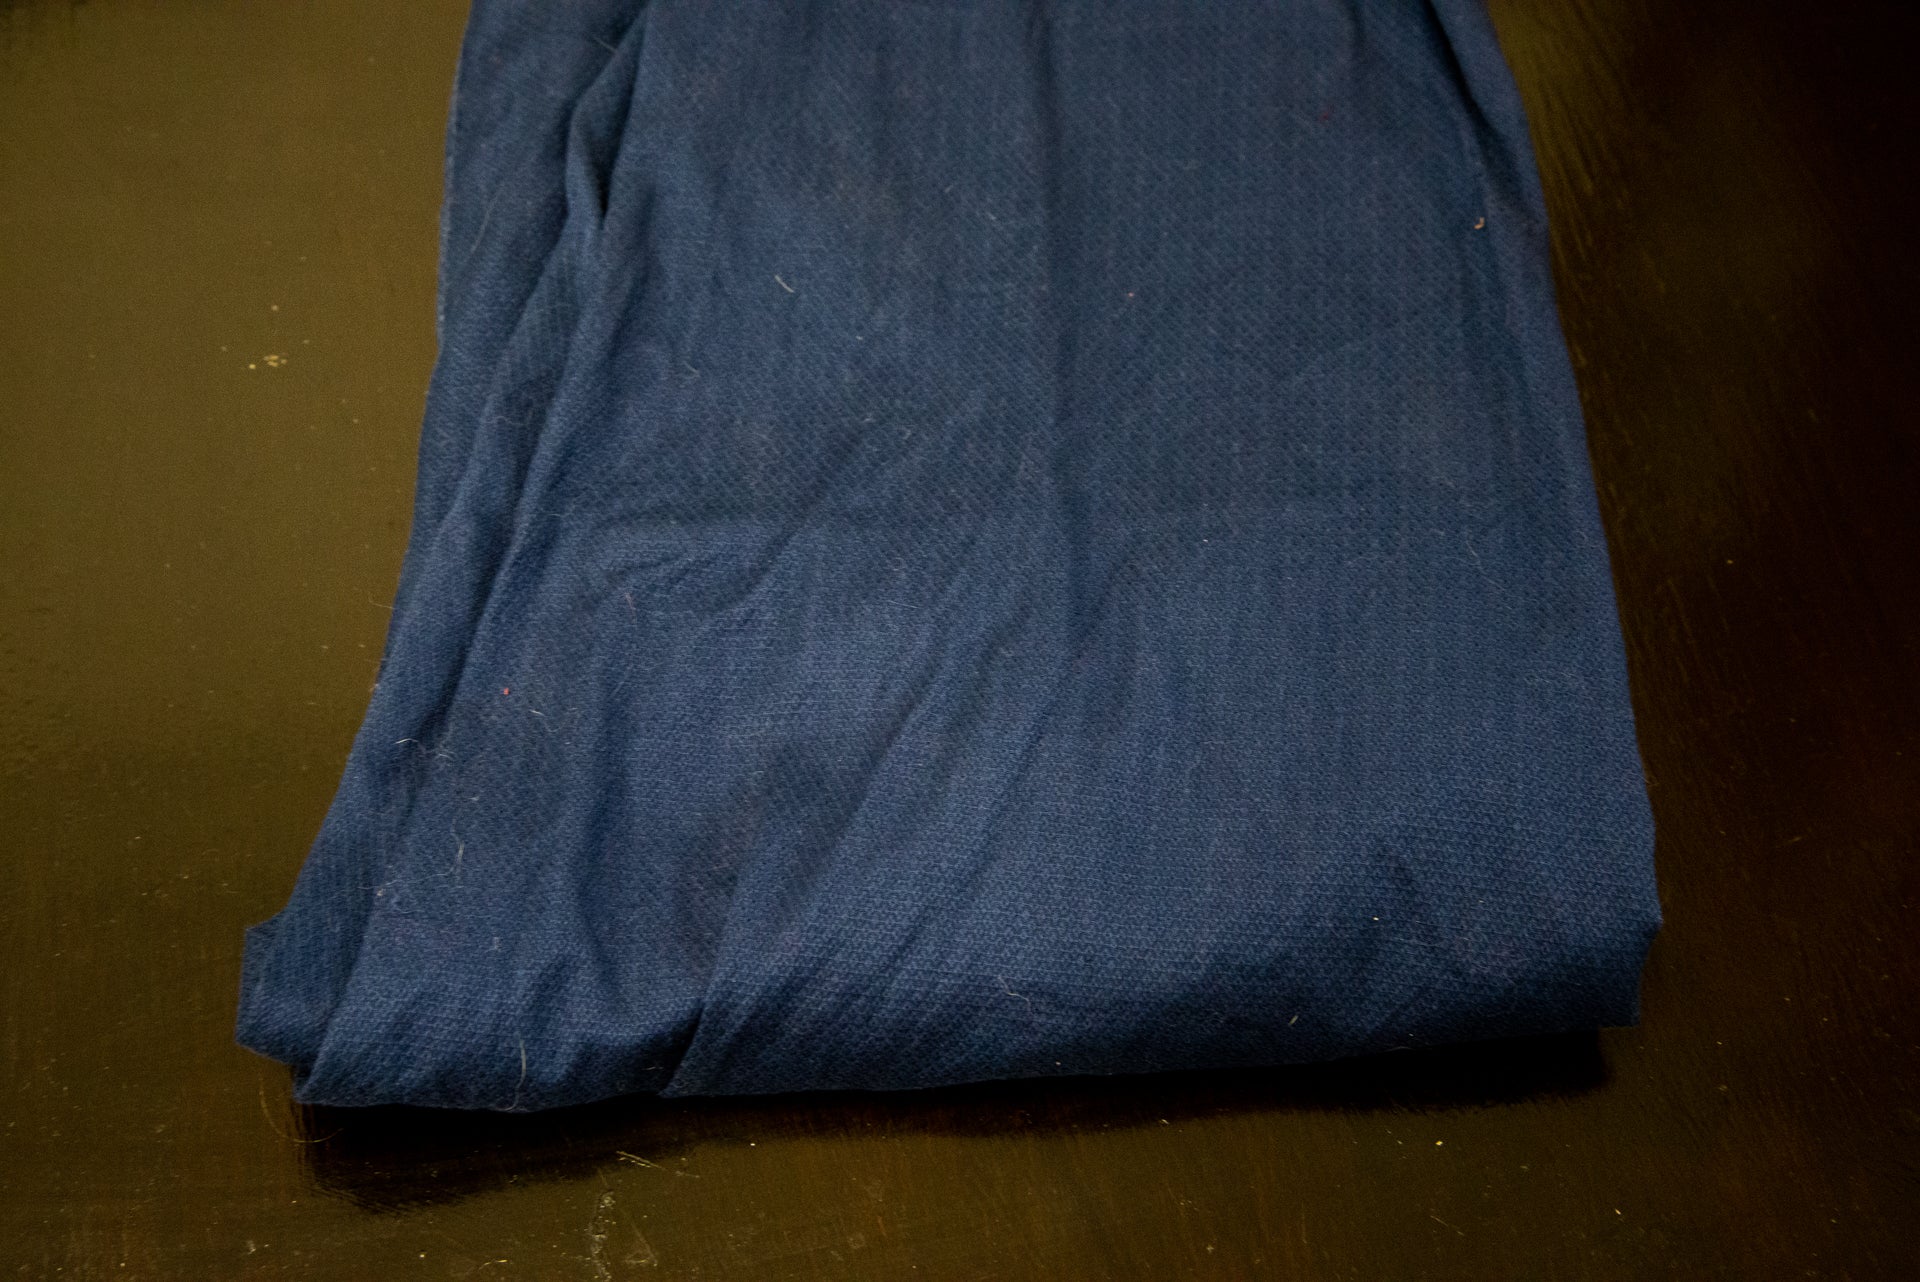 A blue cloth kept on a wooden tableA blue cloth kept on a wooden table